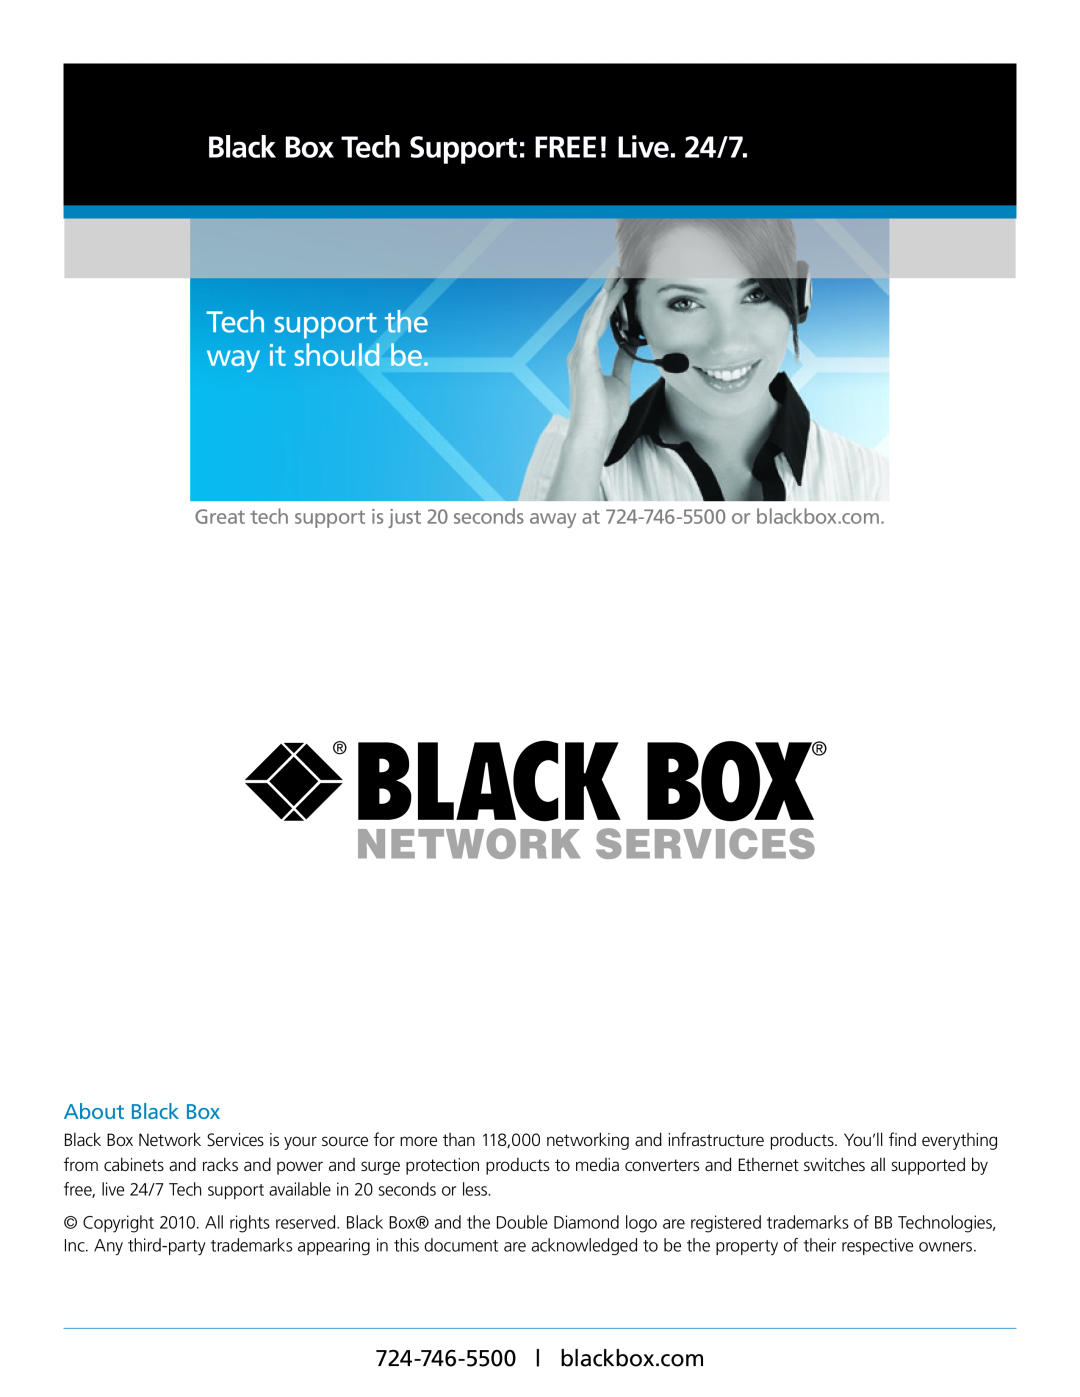 Black Box KV3004A, KV3304A, KV3404A, KV3204A manual About Black Box, Network Services, Black Box Tech Support FREE! Live. 24/7 